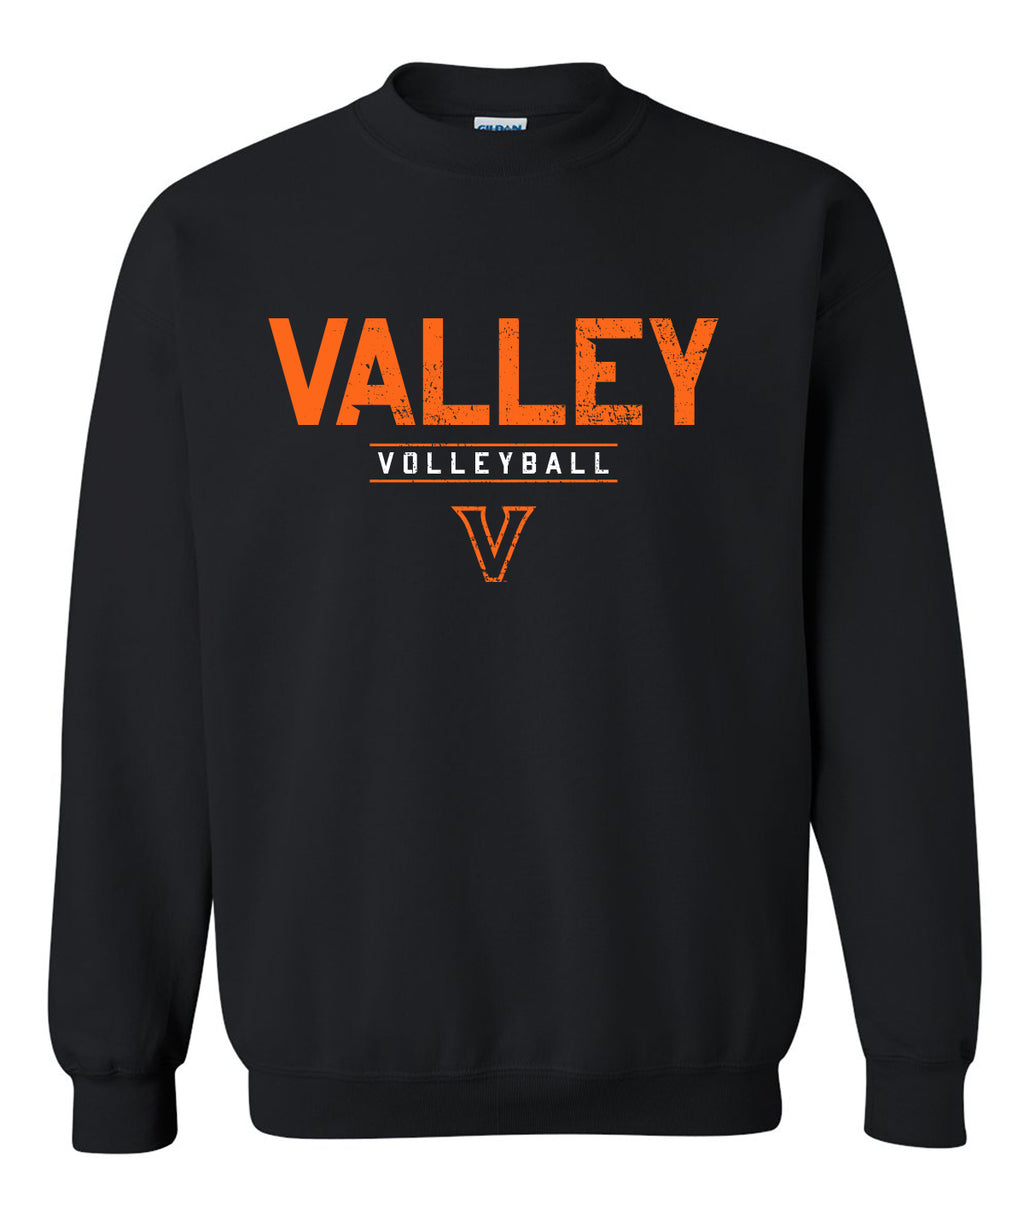 Valley Volleyball Crewneck Sweatshirt